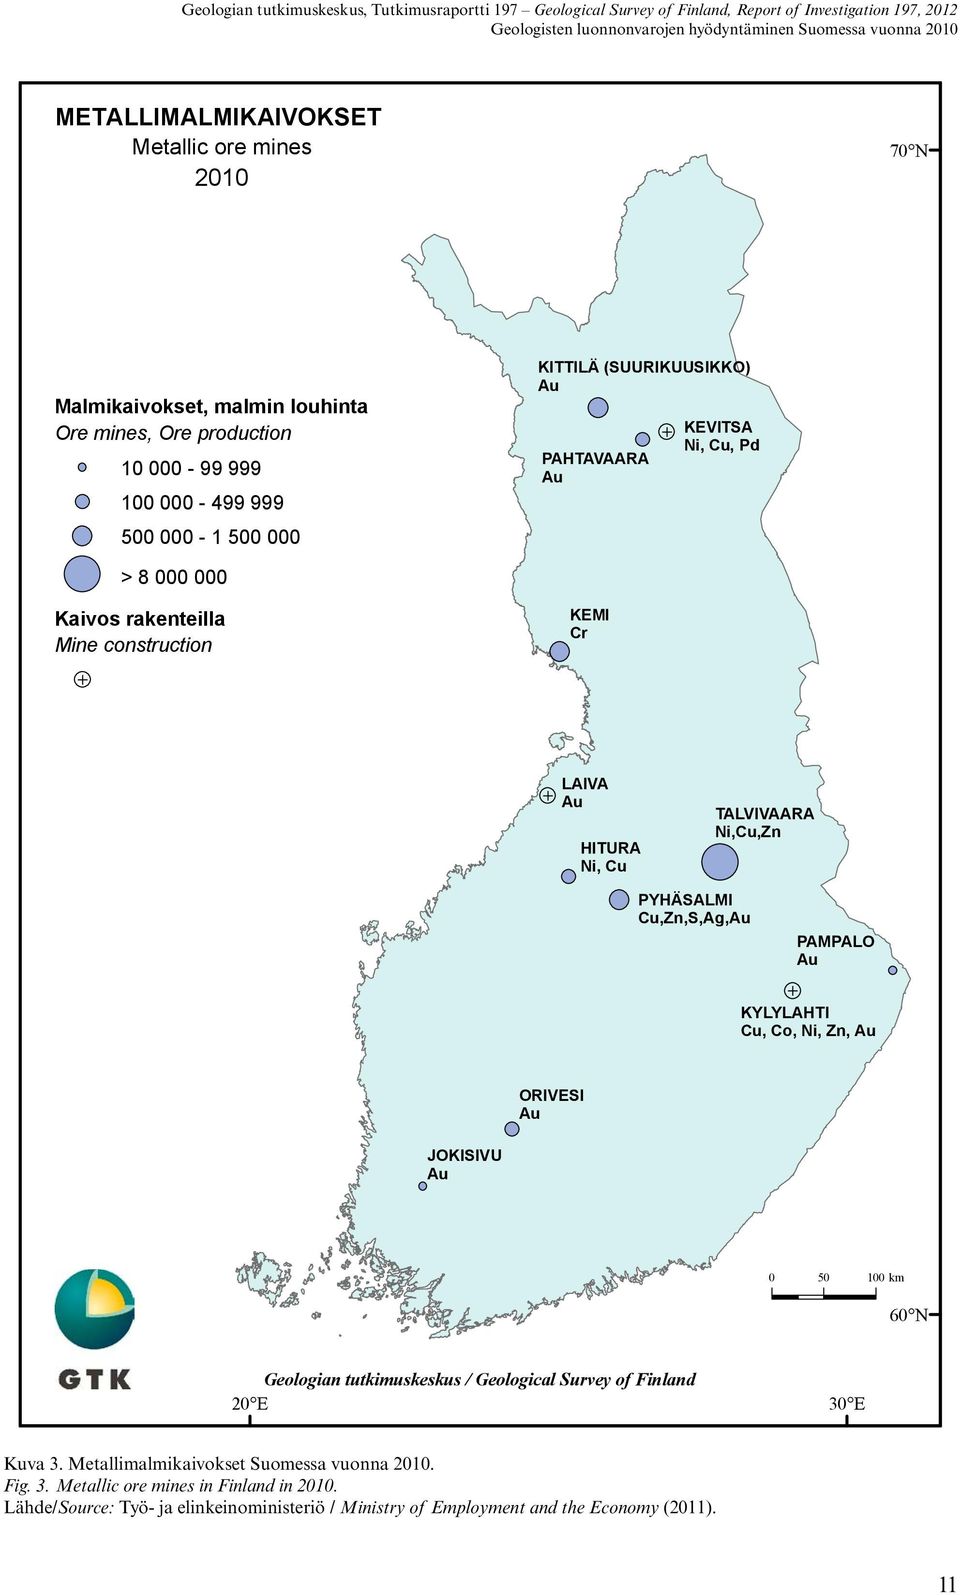 Ni,Cu,Zn PYHÄSALMI Cu,Zn,S,Ag,Au PAMPALO Au KYLYLAHTI Cu, Co, Ni, Zn, Au ORIVESI Au JOKISIVU Au 0 50 100 km 60 N Geologian tutkimuskeskus / Geological Survey of Finland 20 E 30 E Kuva 3.